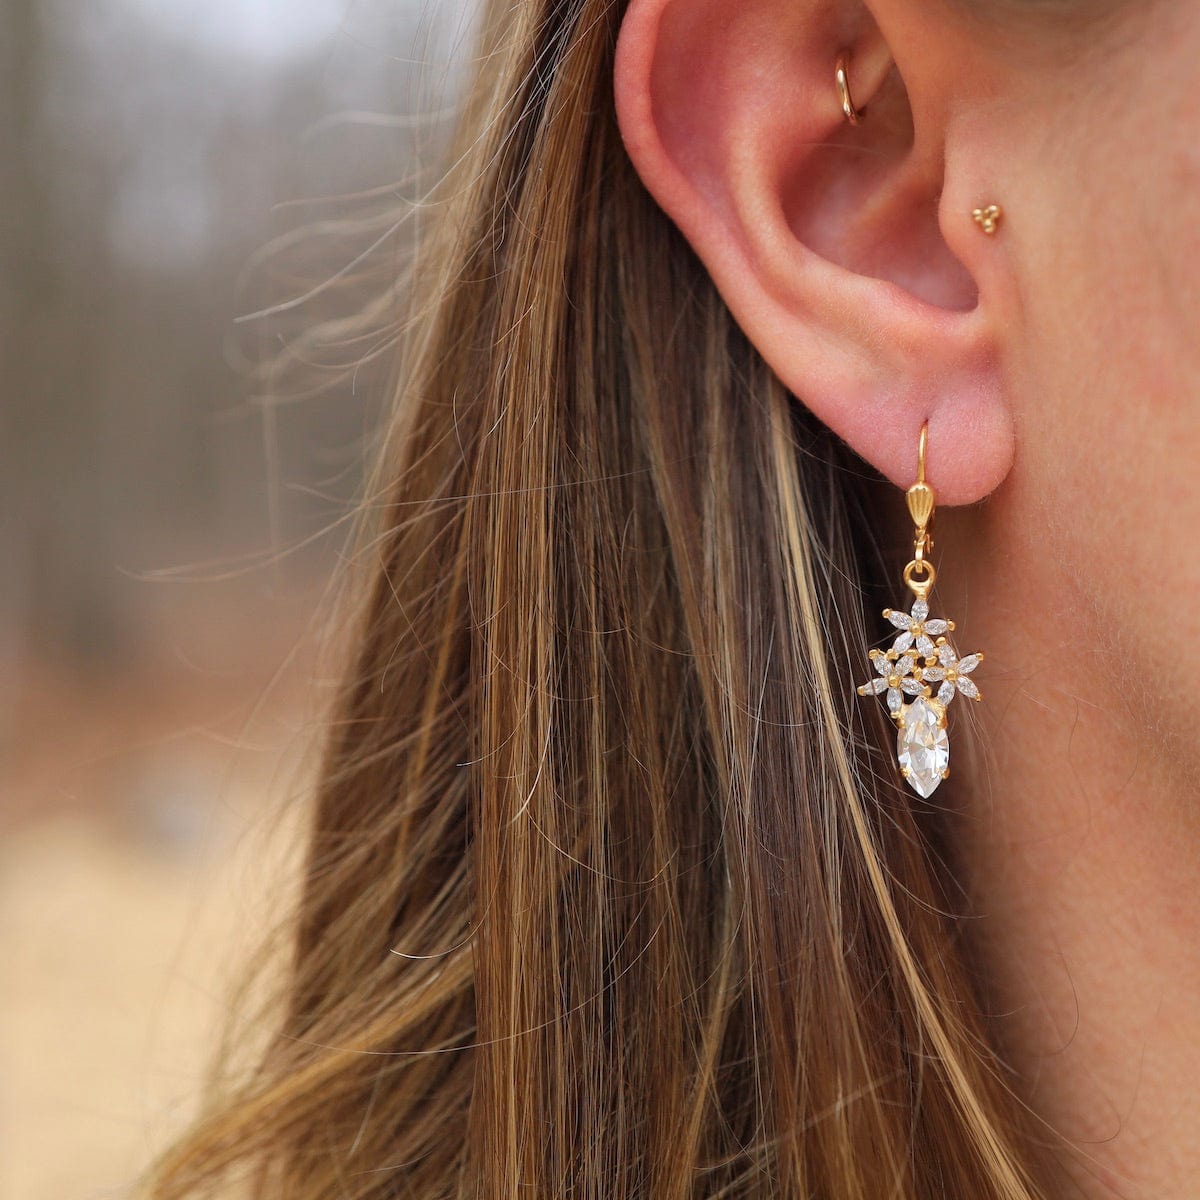 EAR-JM Rhinestone Flower and Clear Crystal Earrings - Gold Plate